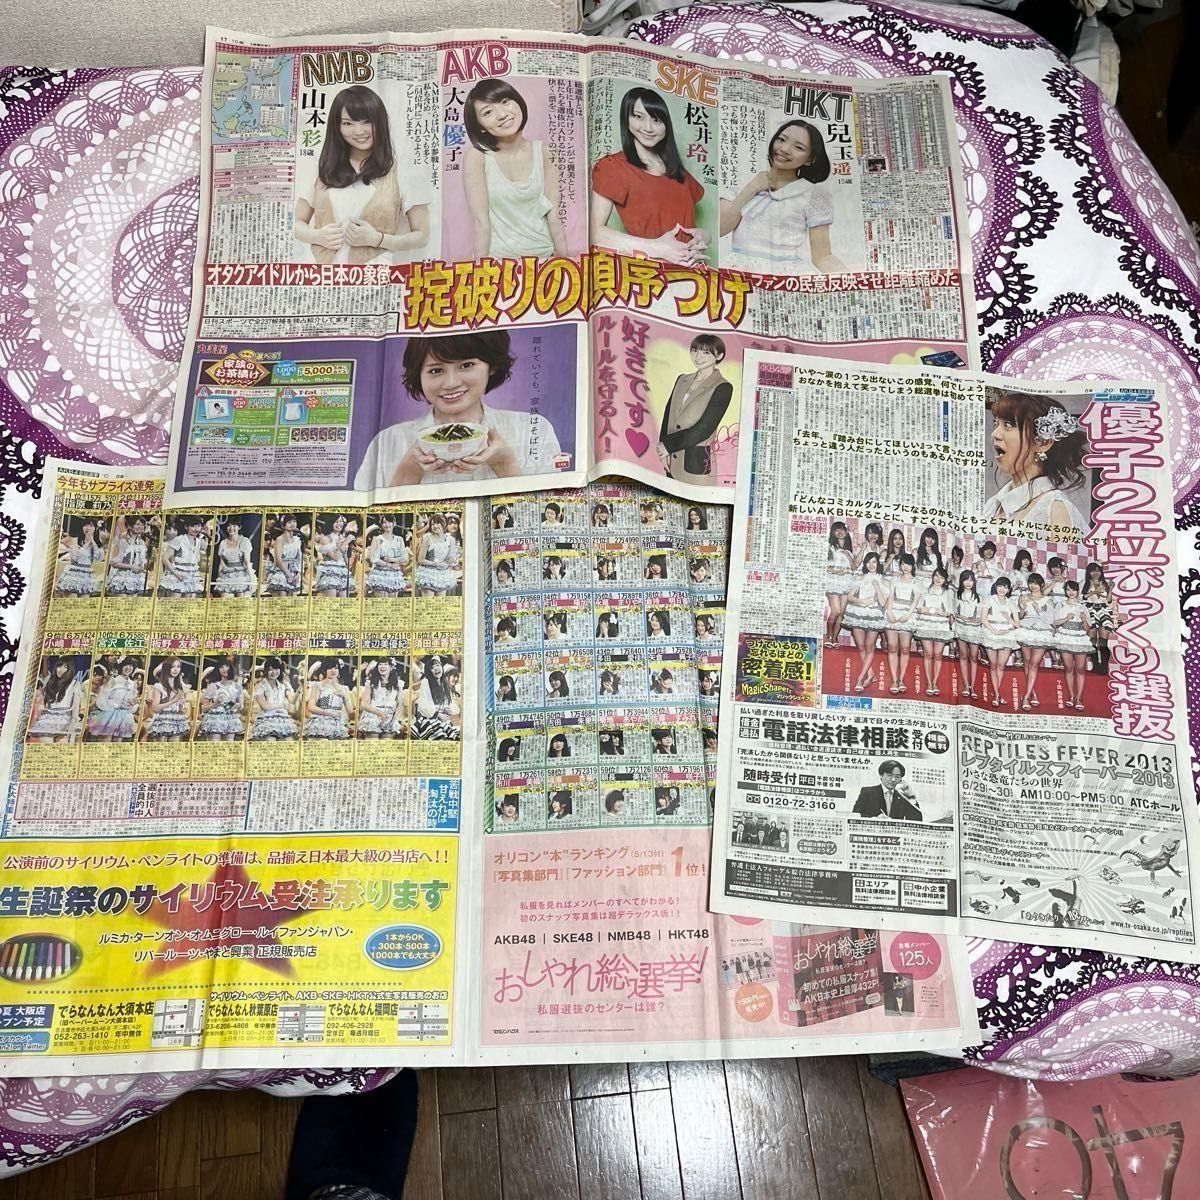 48G（AKB48,NMB48,SKE48,HKT48,その他）新聞 + AKB48真夏の5大ドームツアー公式パンフレット